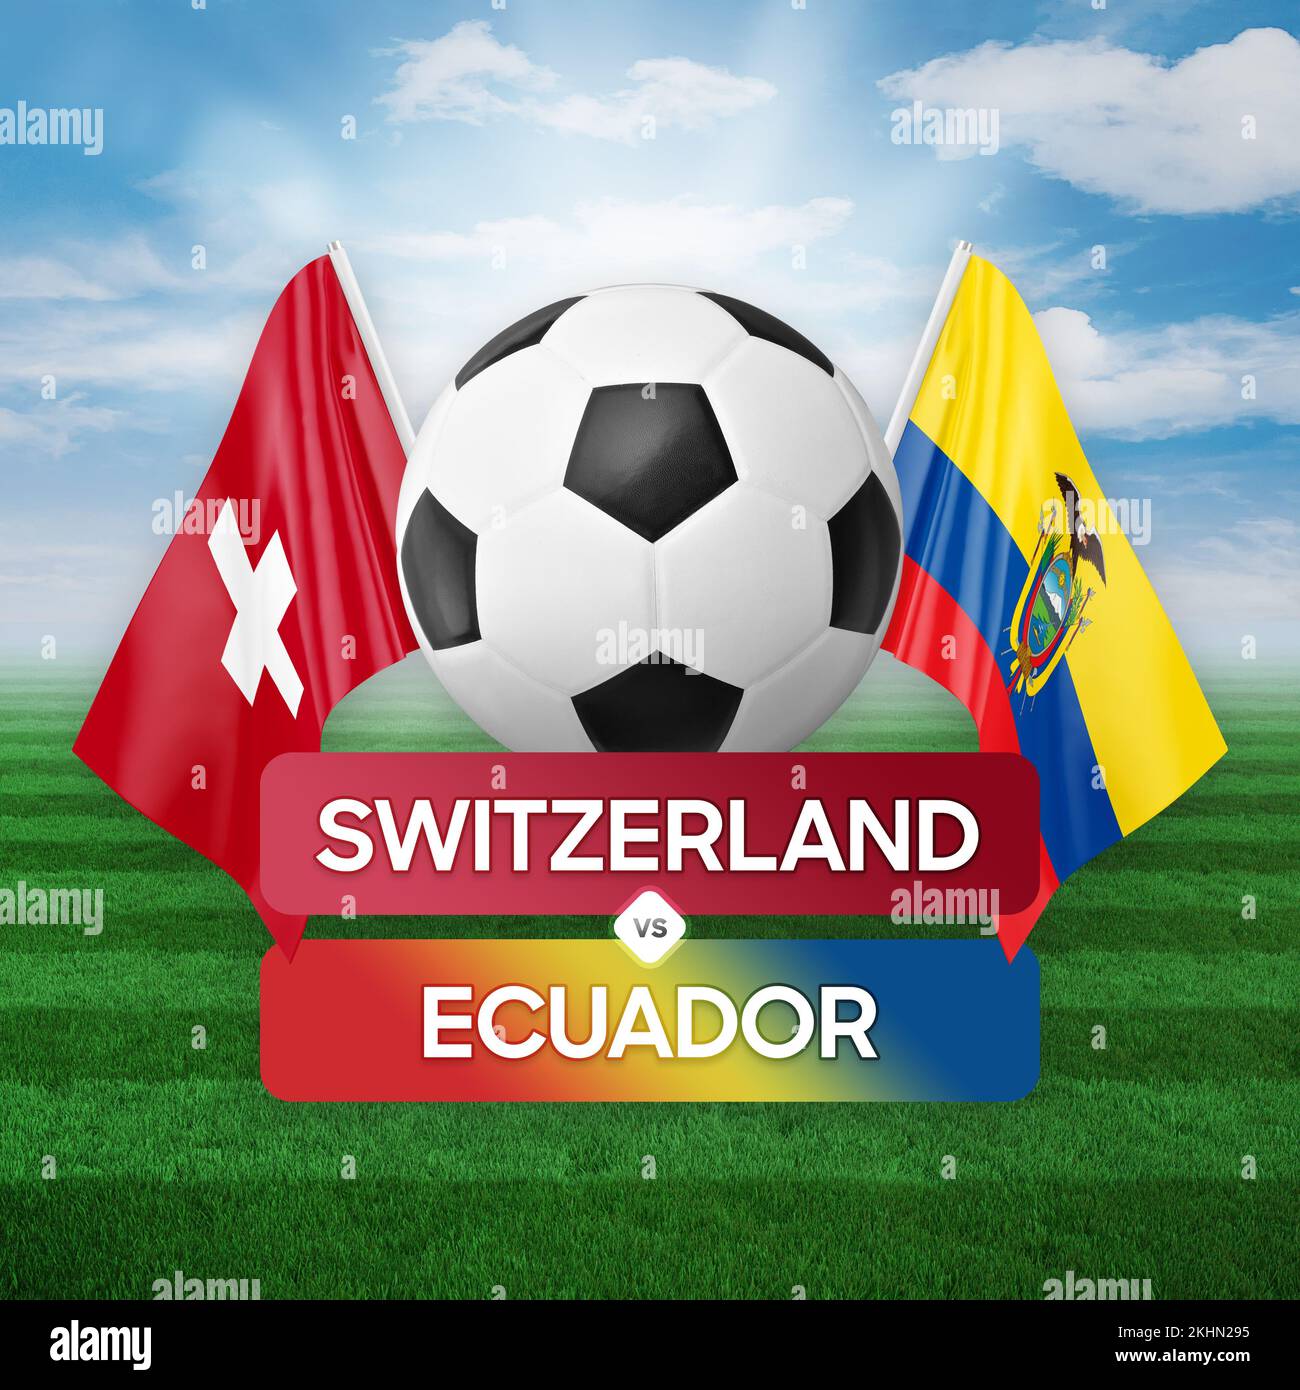 Switzerland vs Ecuador national teams soccer football match competition concept. Stock Photo